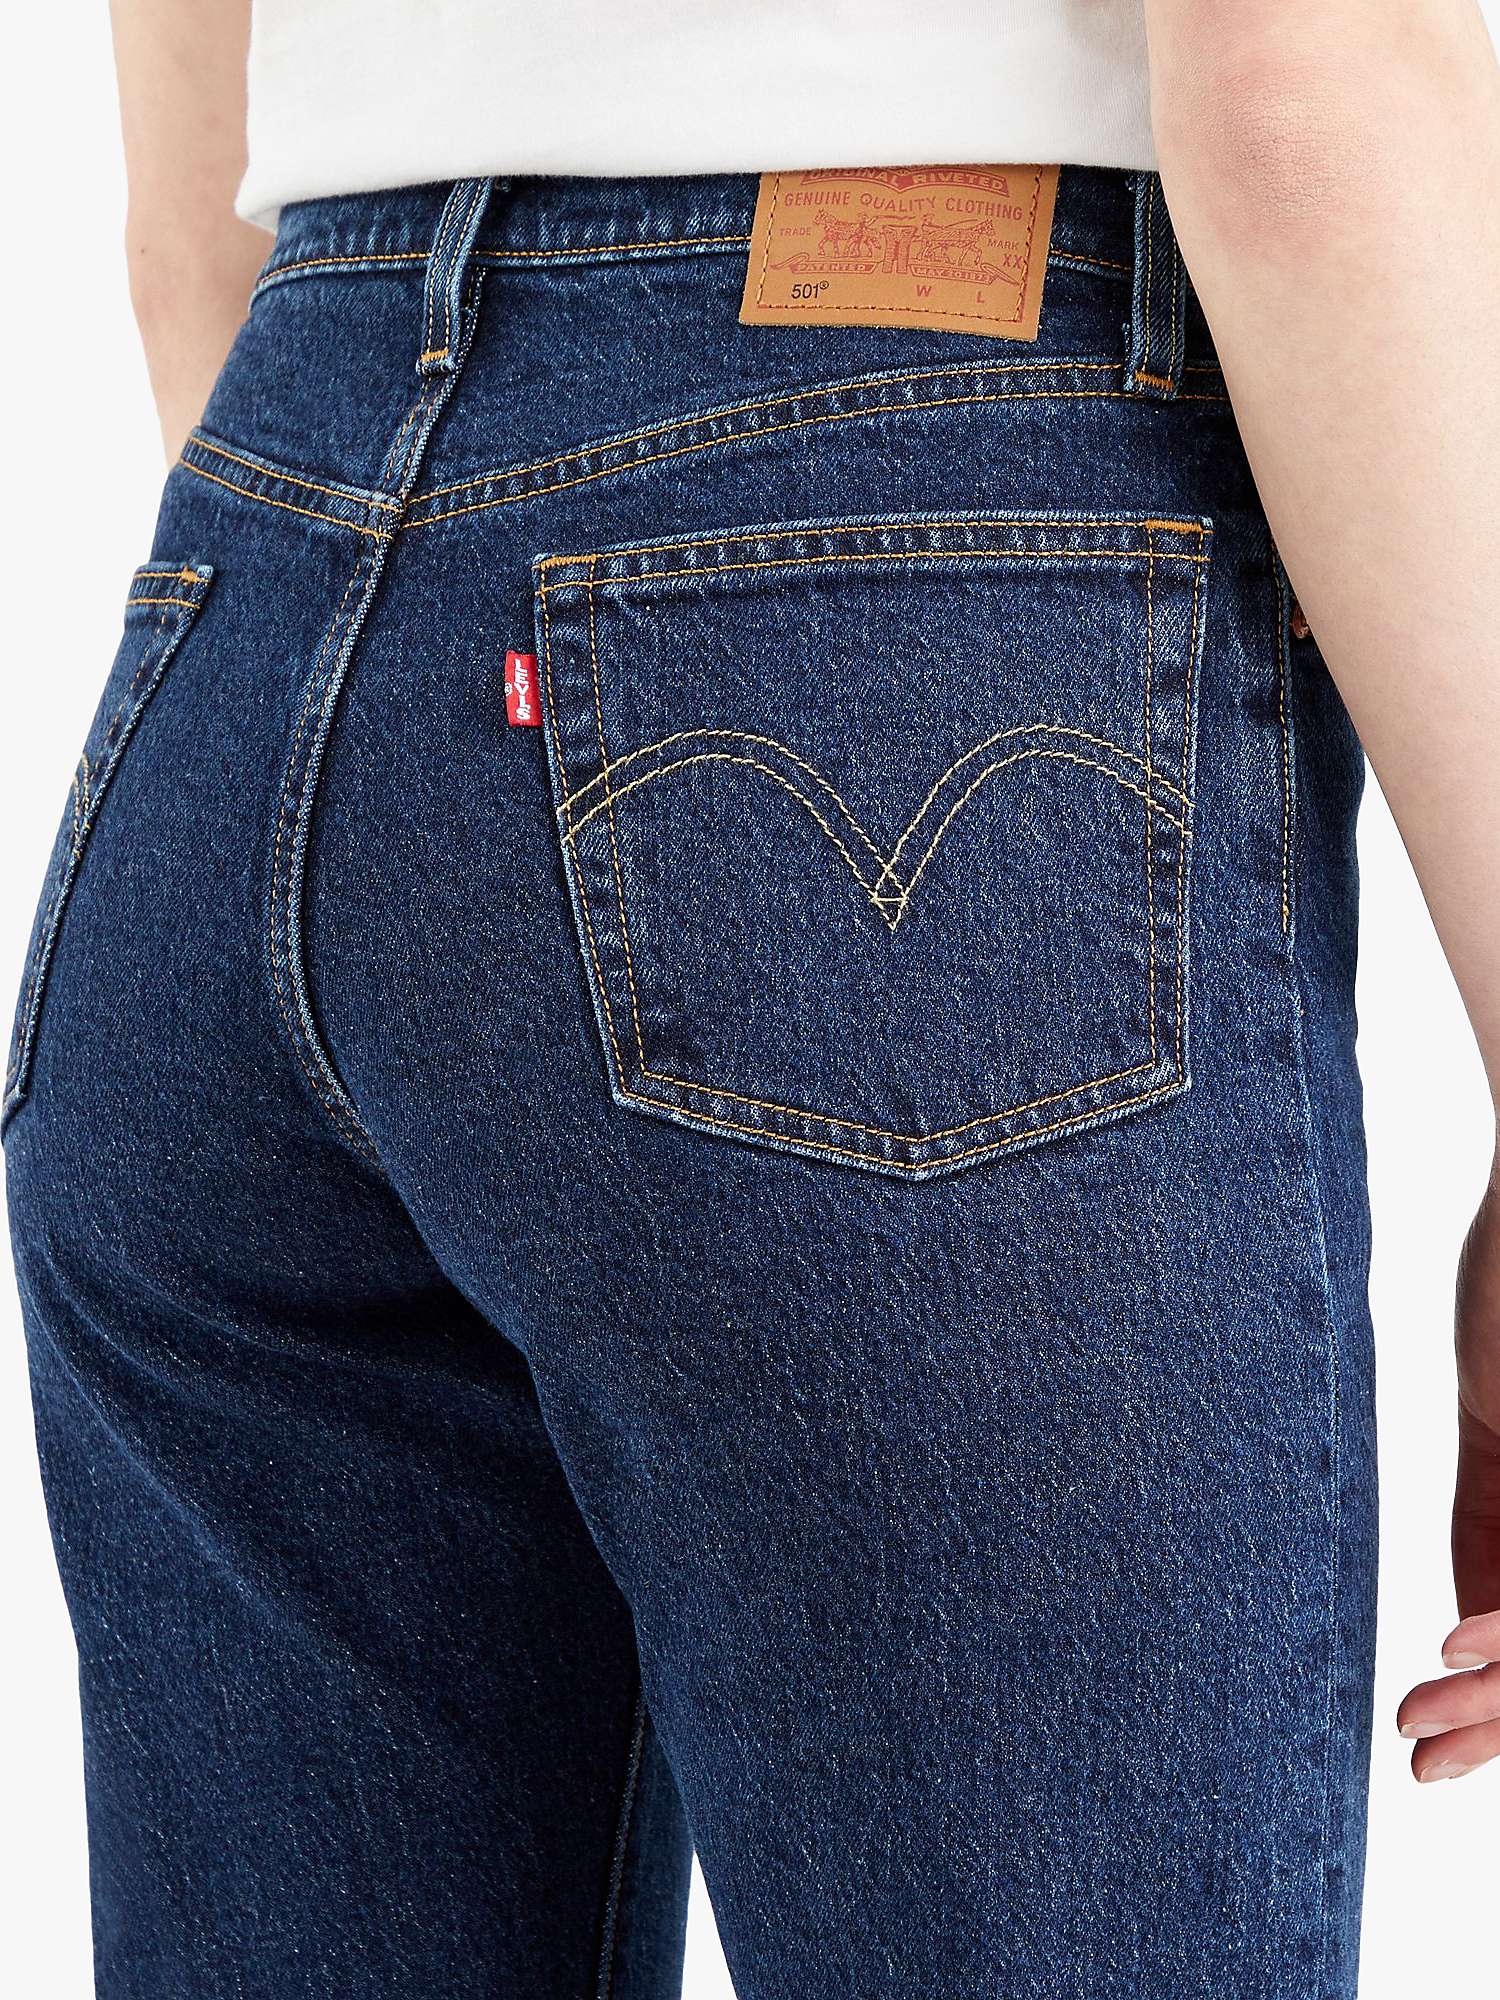 Levi's 501 Cropped Jeans, Salsa Stonewash at John Lewis & Partners